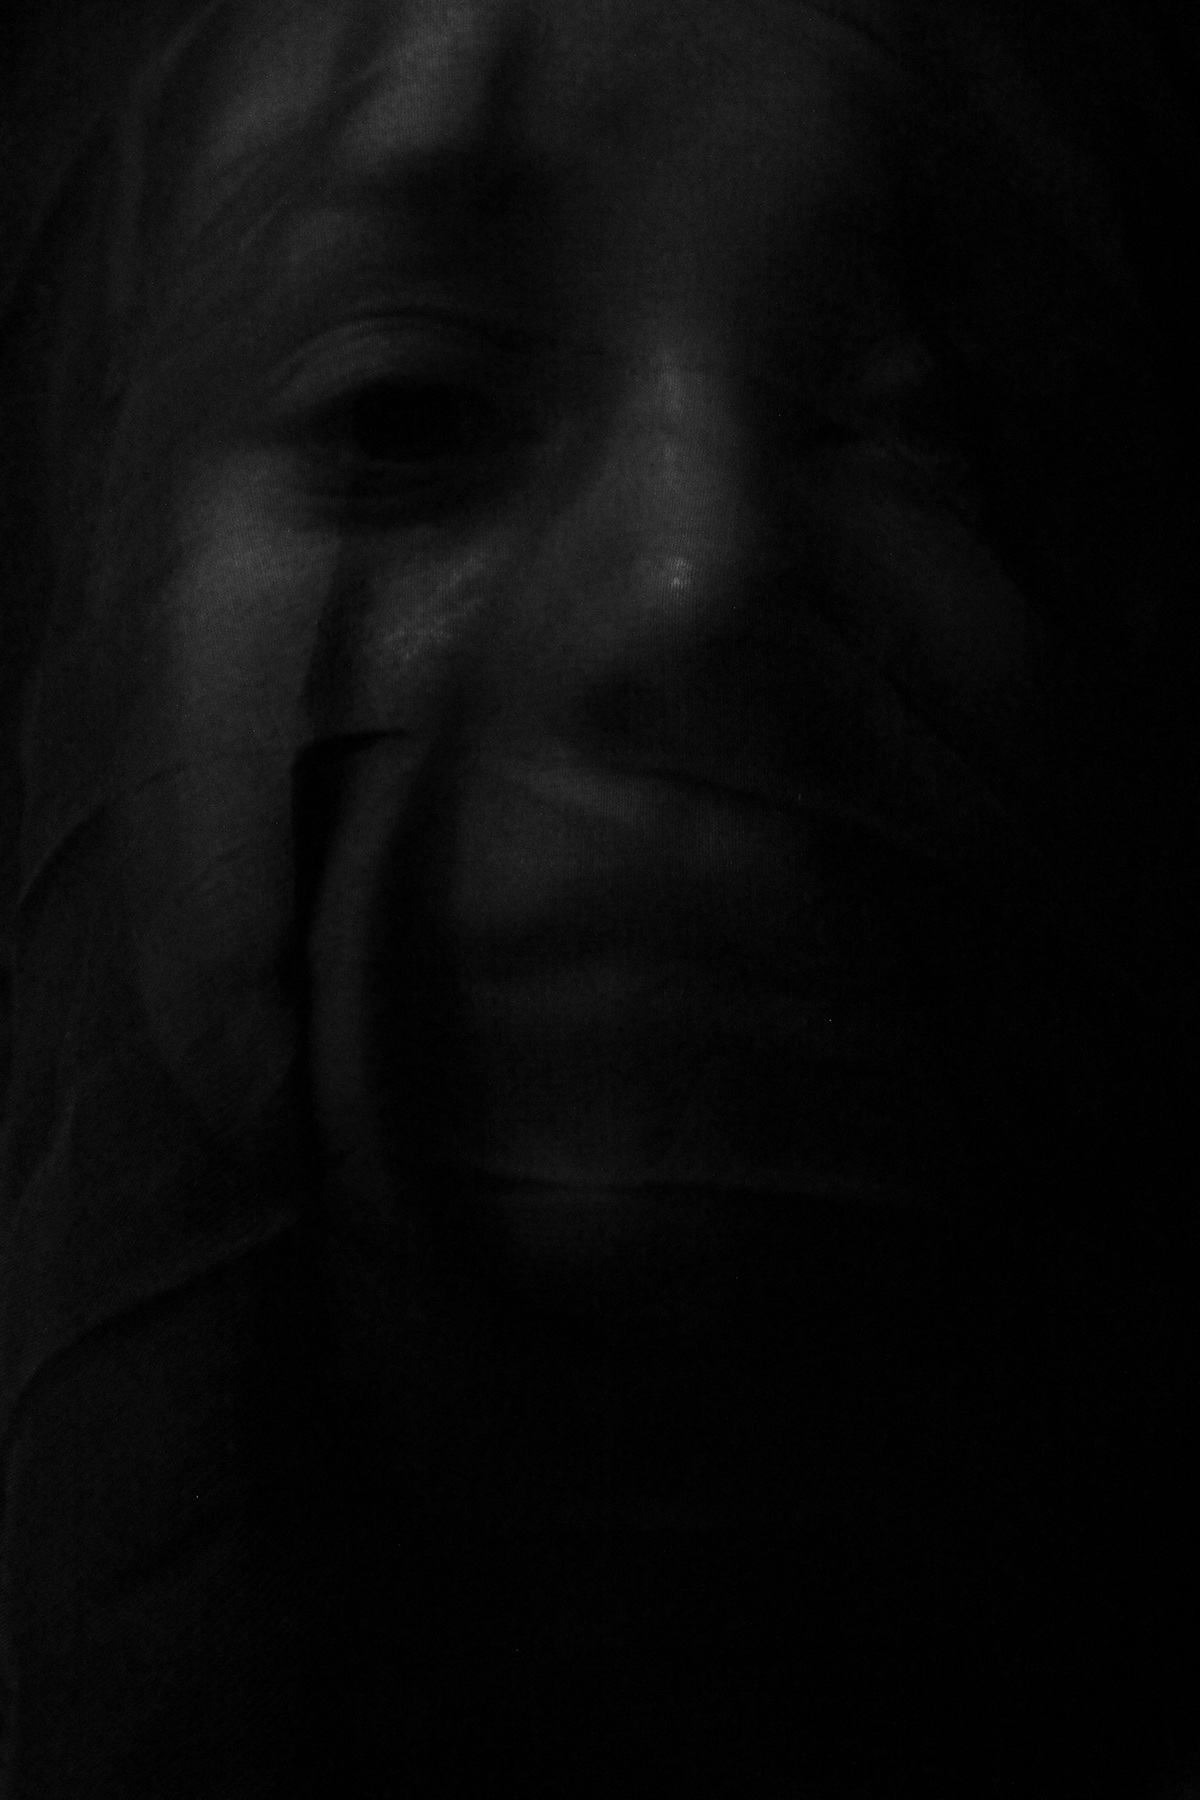 Veil black darkness face contours